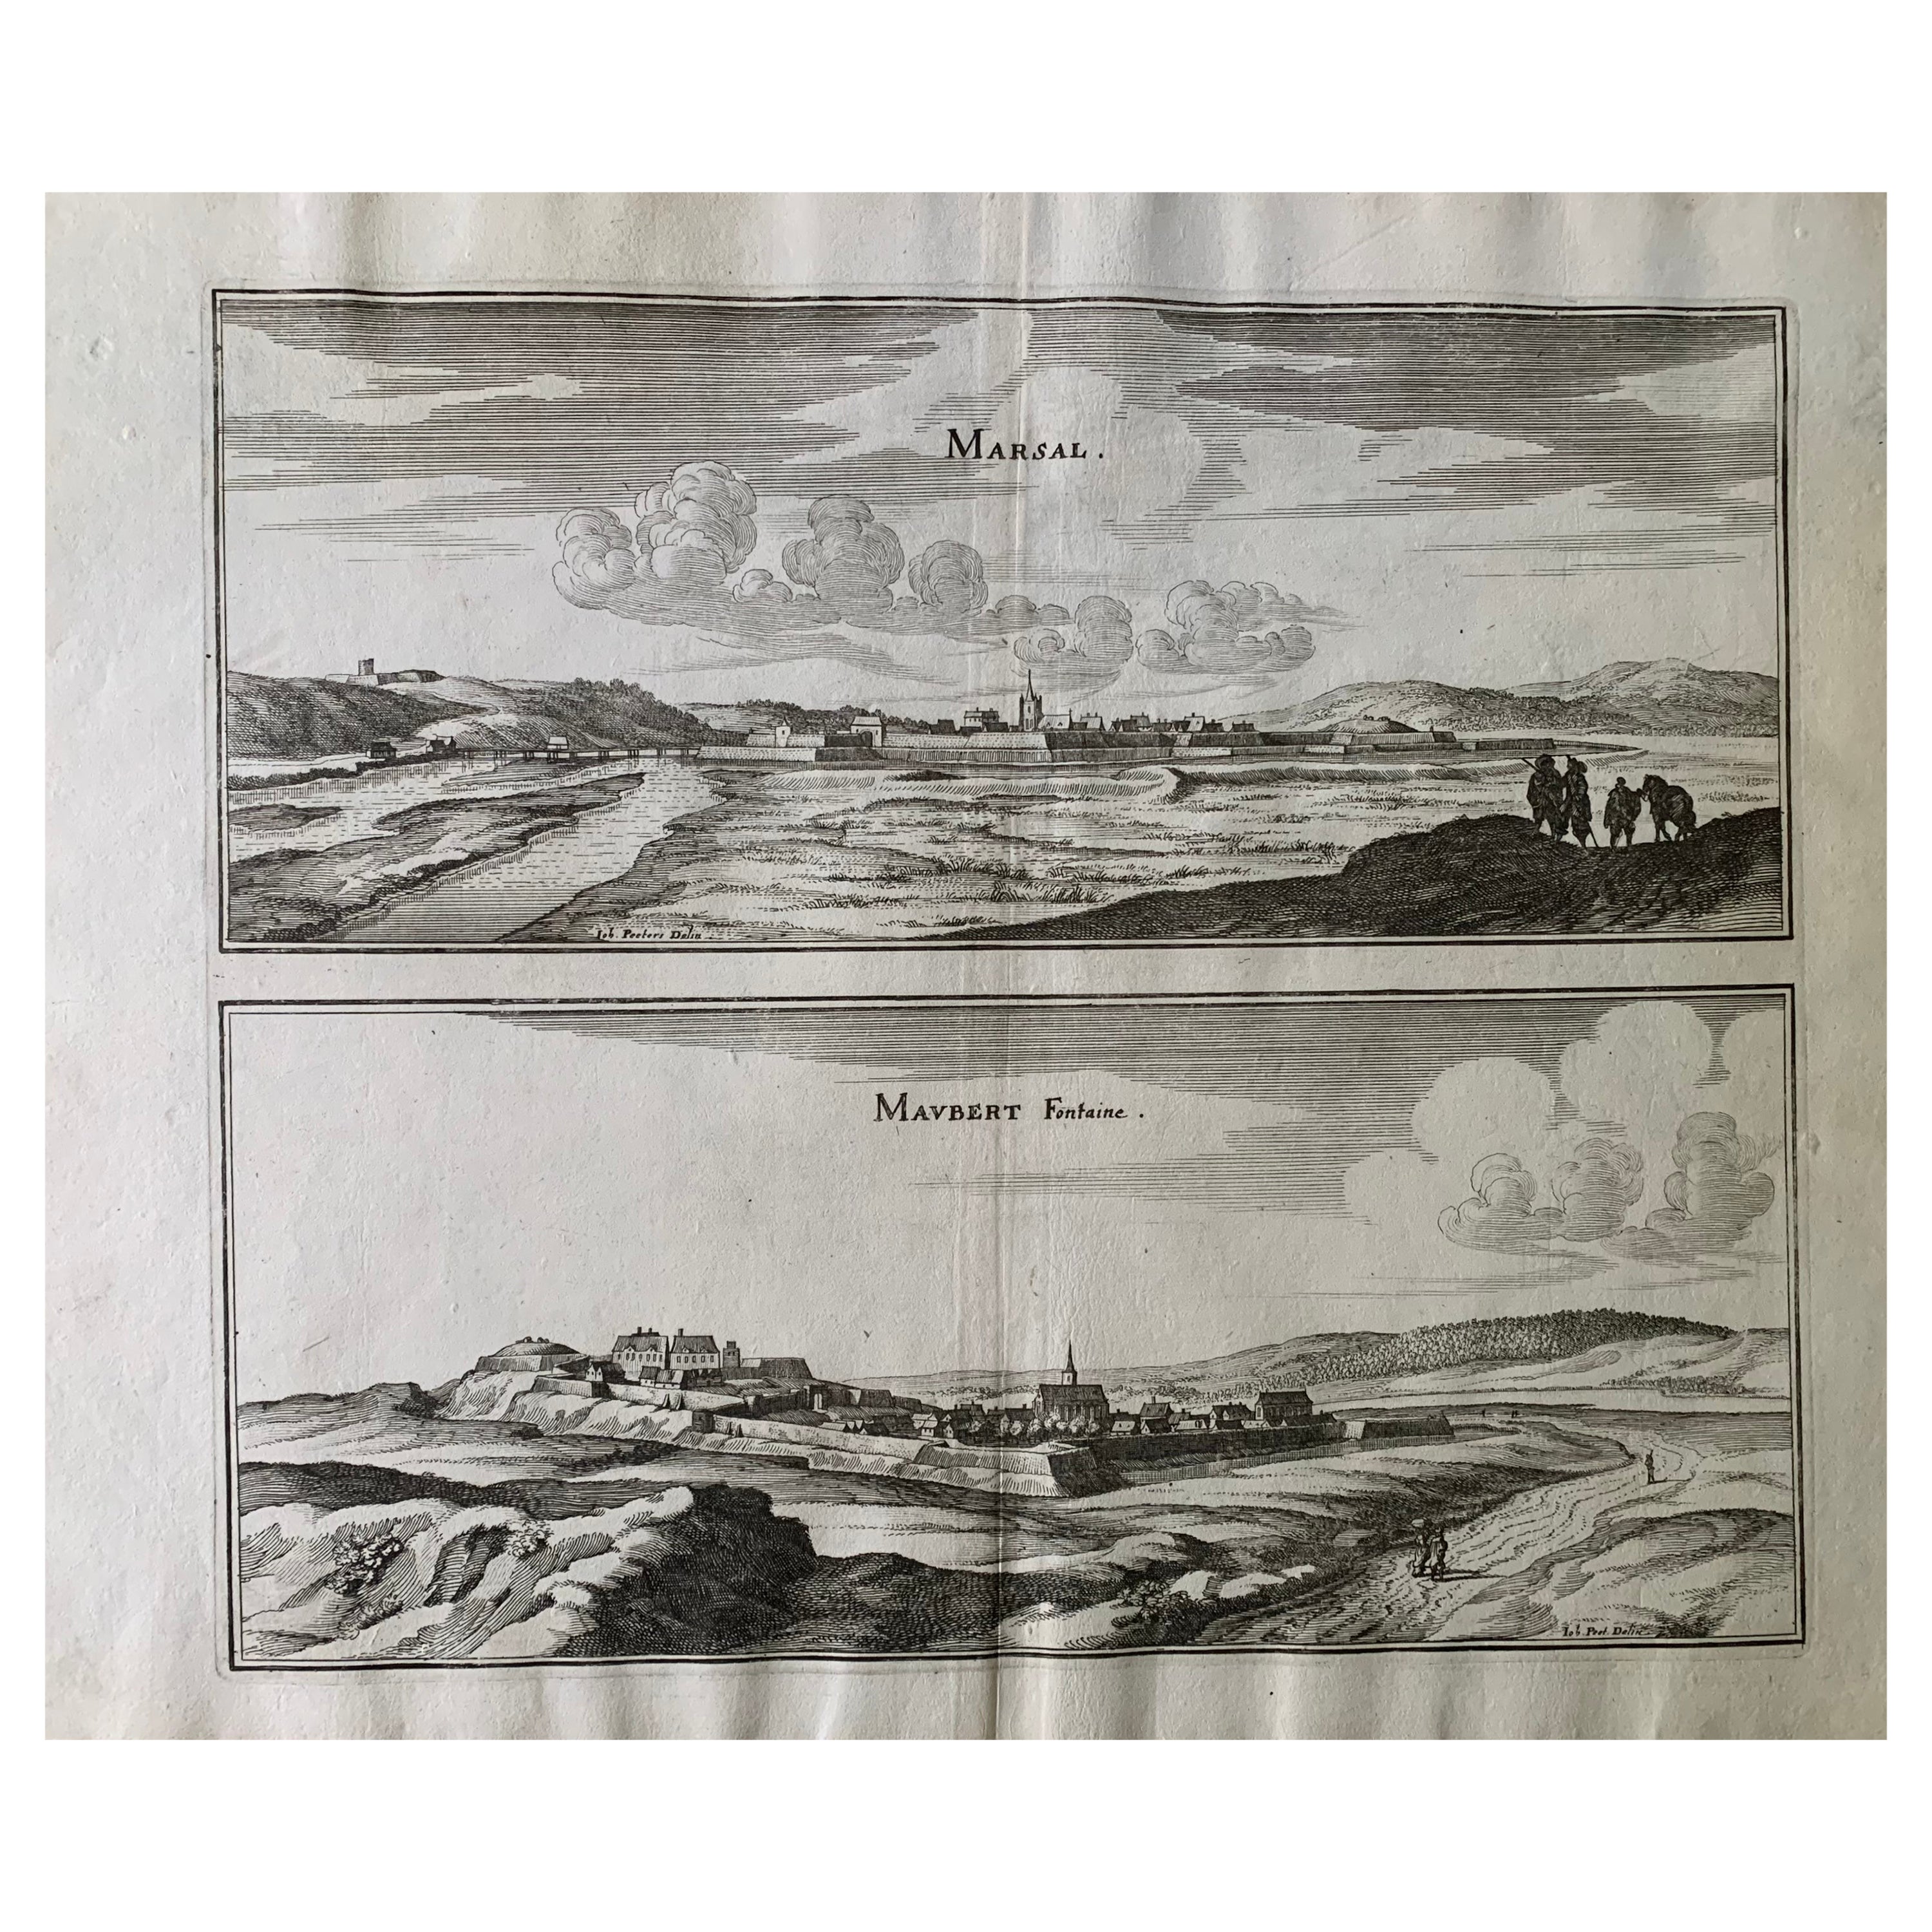 Topographische Karte des 17. Jahrhunderts, Champagne-Ardenne, Marsal, Maubert Iohan Peeters